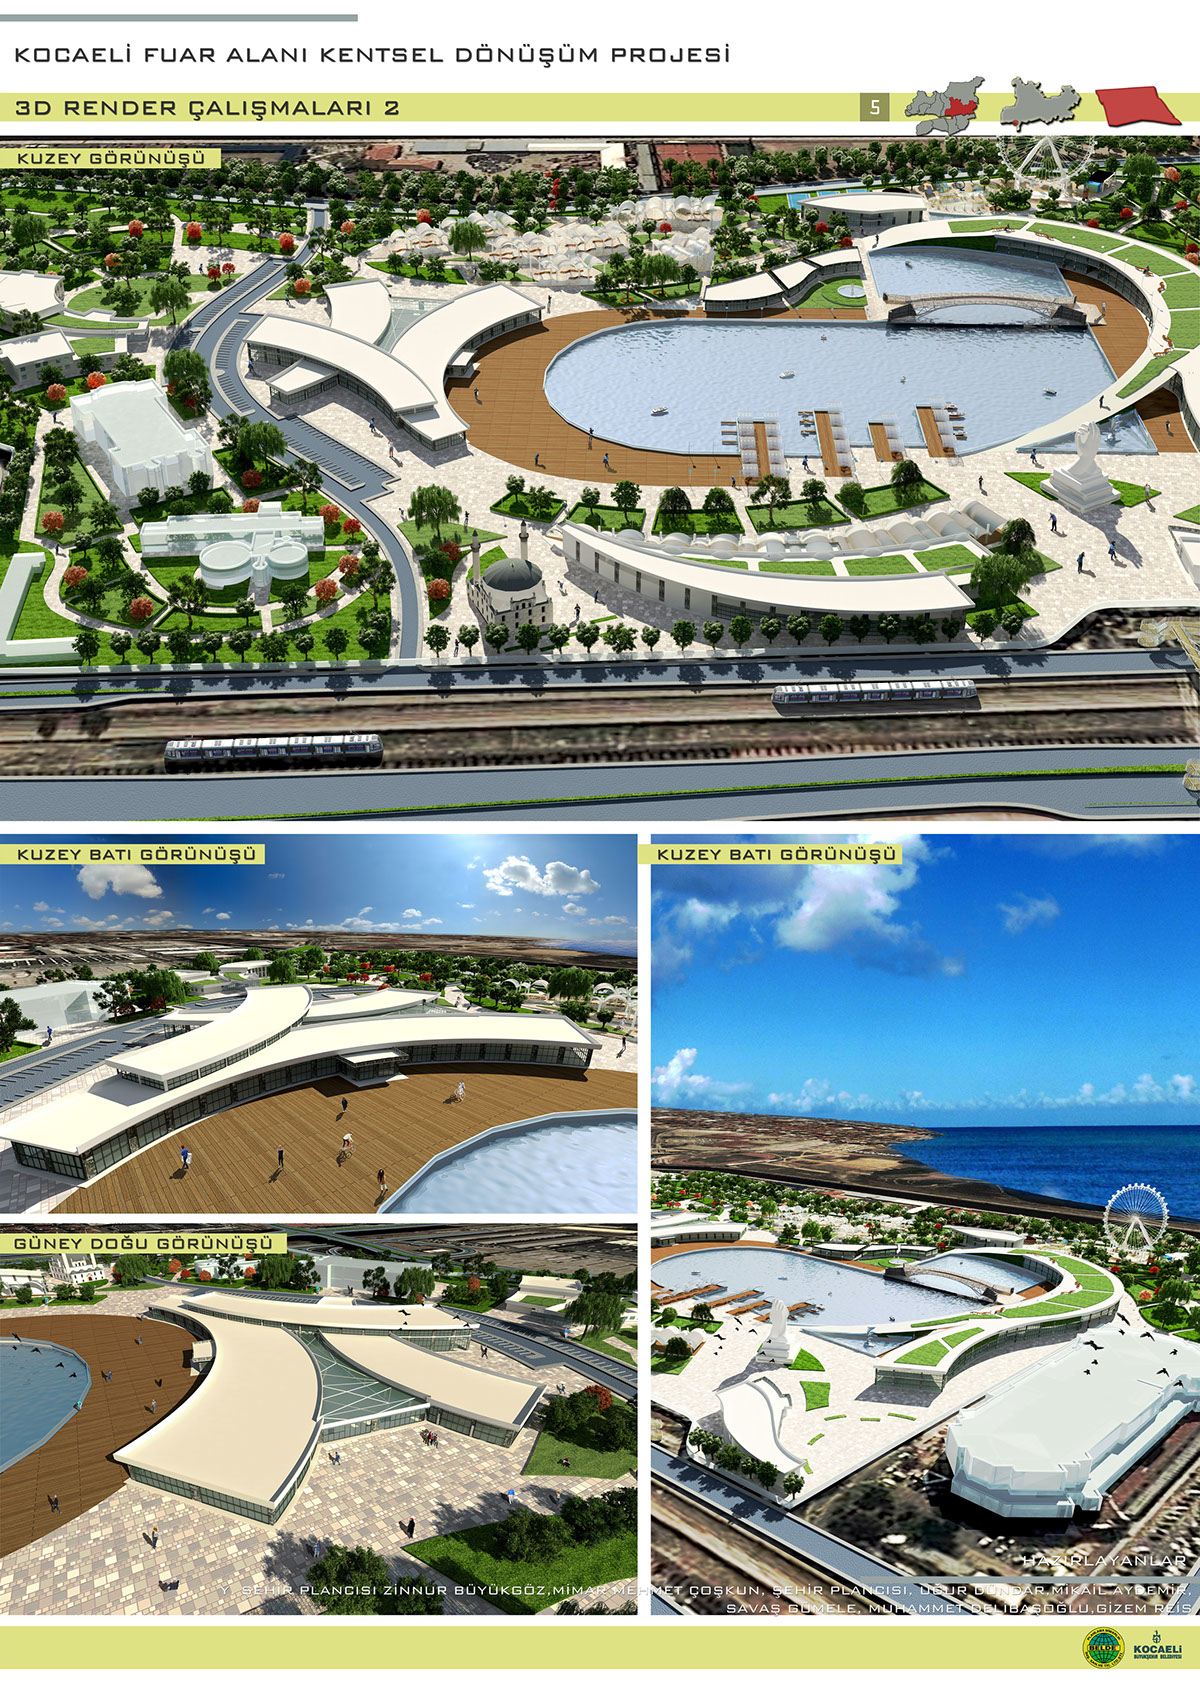 Urban Design architecture architectural design planning kocaeli FUAR ALANI KENTSEL TASARIM Master Plan